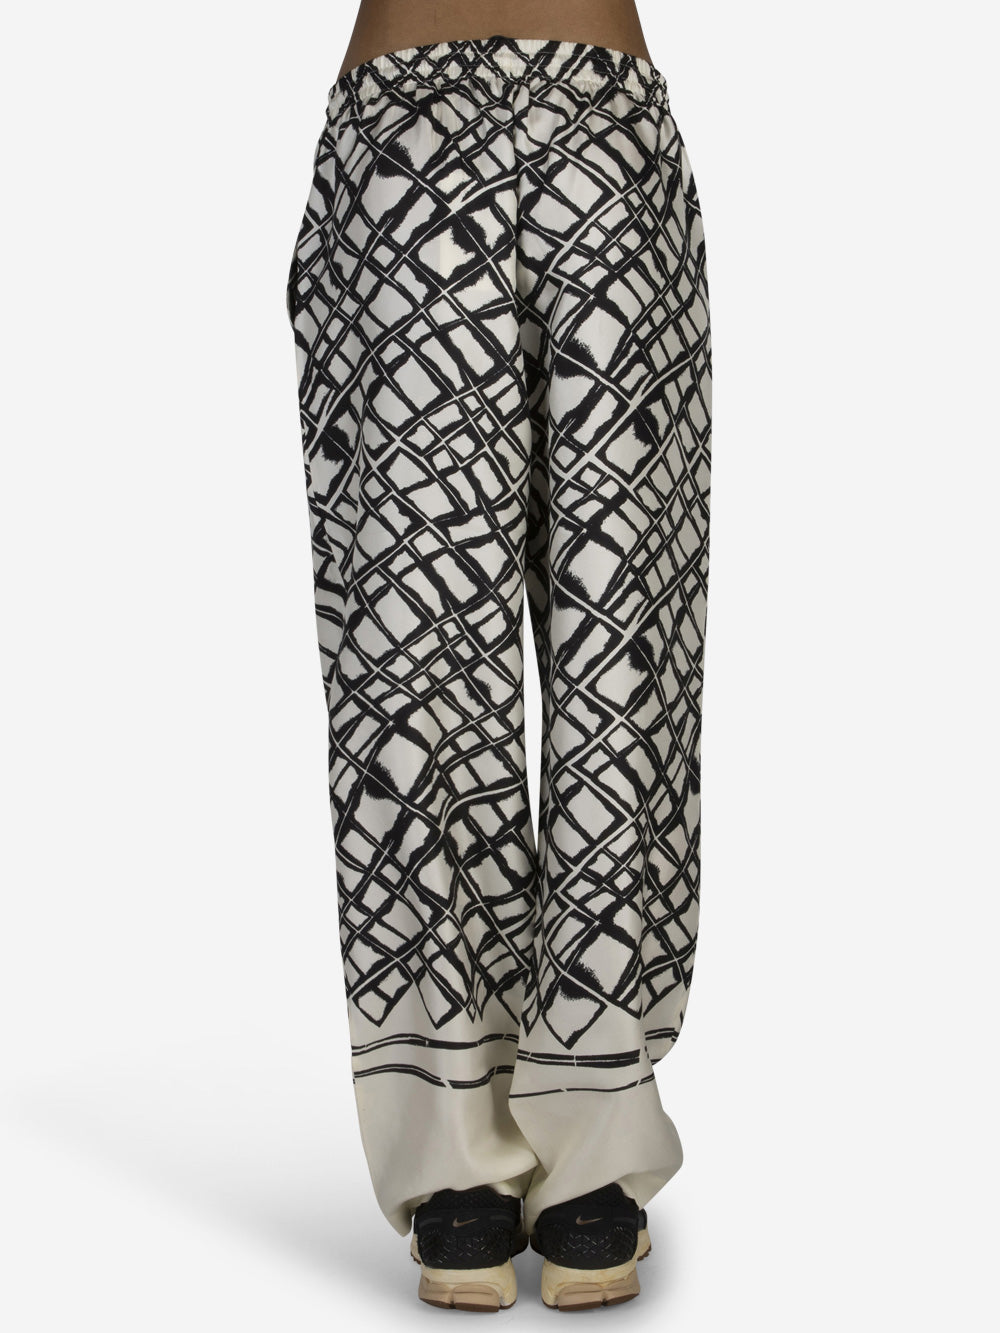 ROHE Pantaloni in seta stampata Bianco nero Urbanstaroma